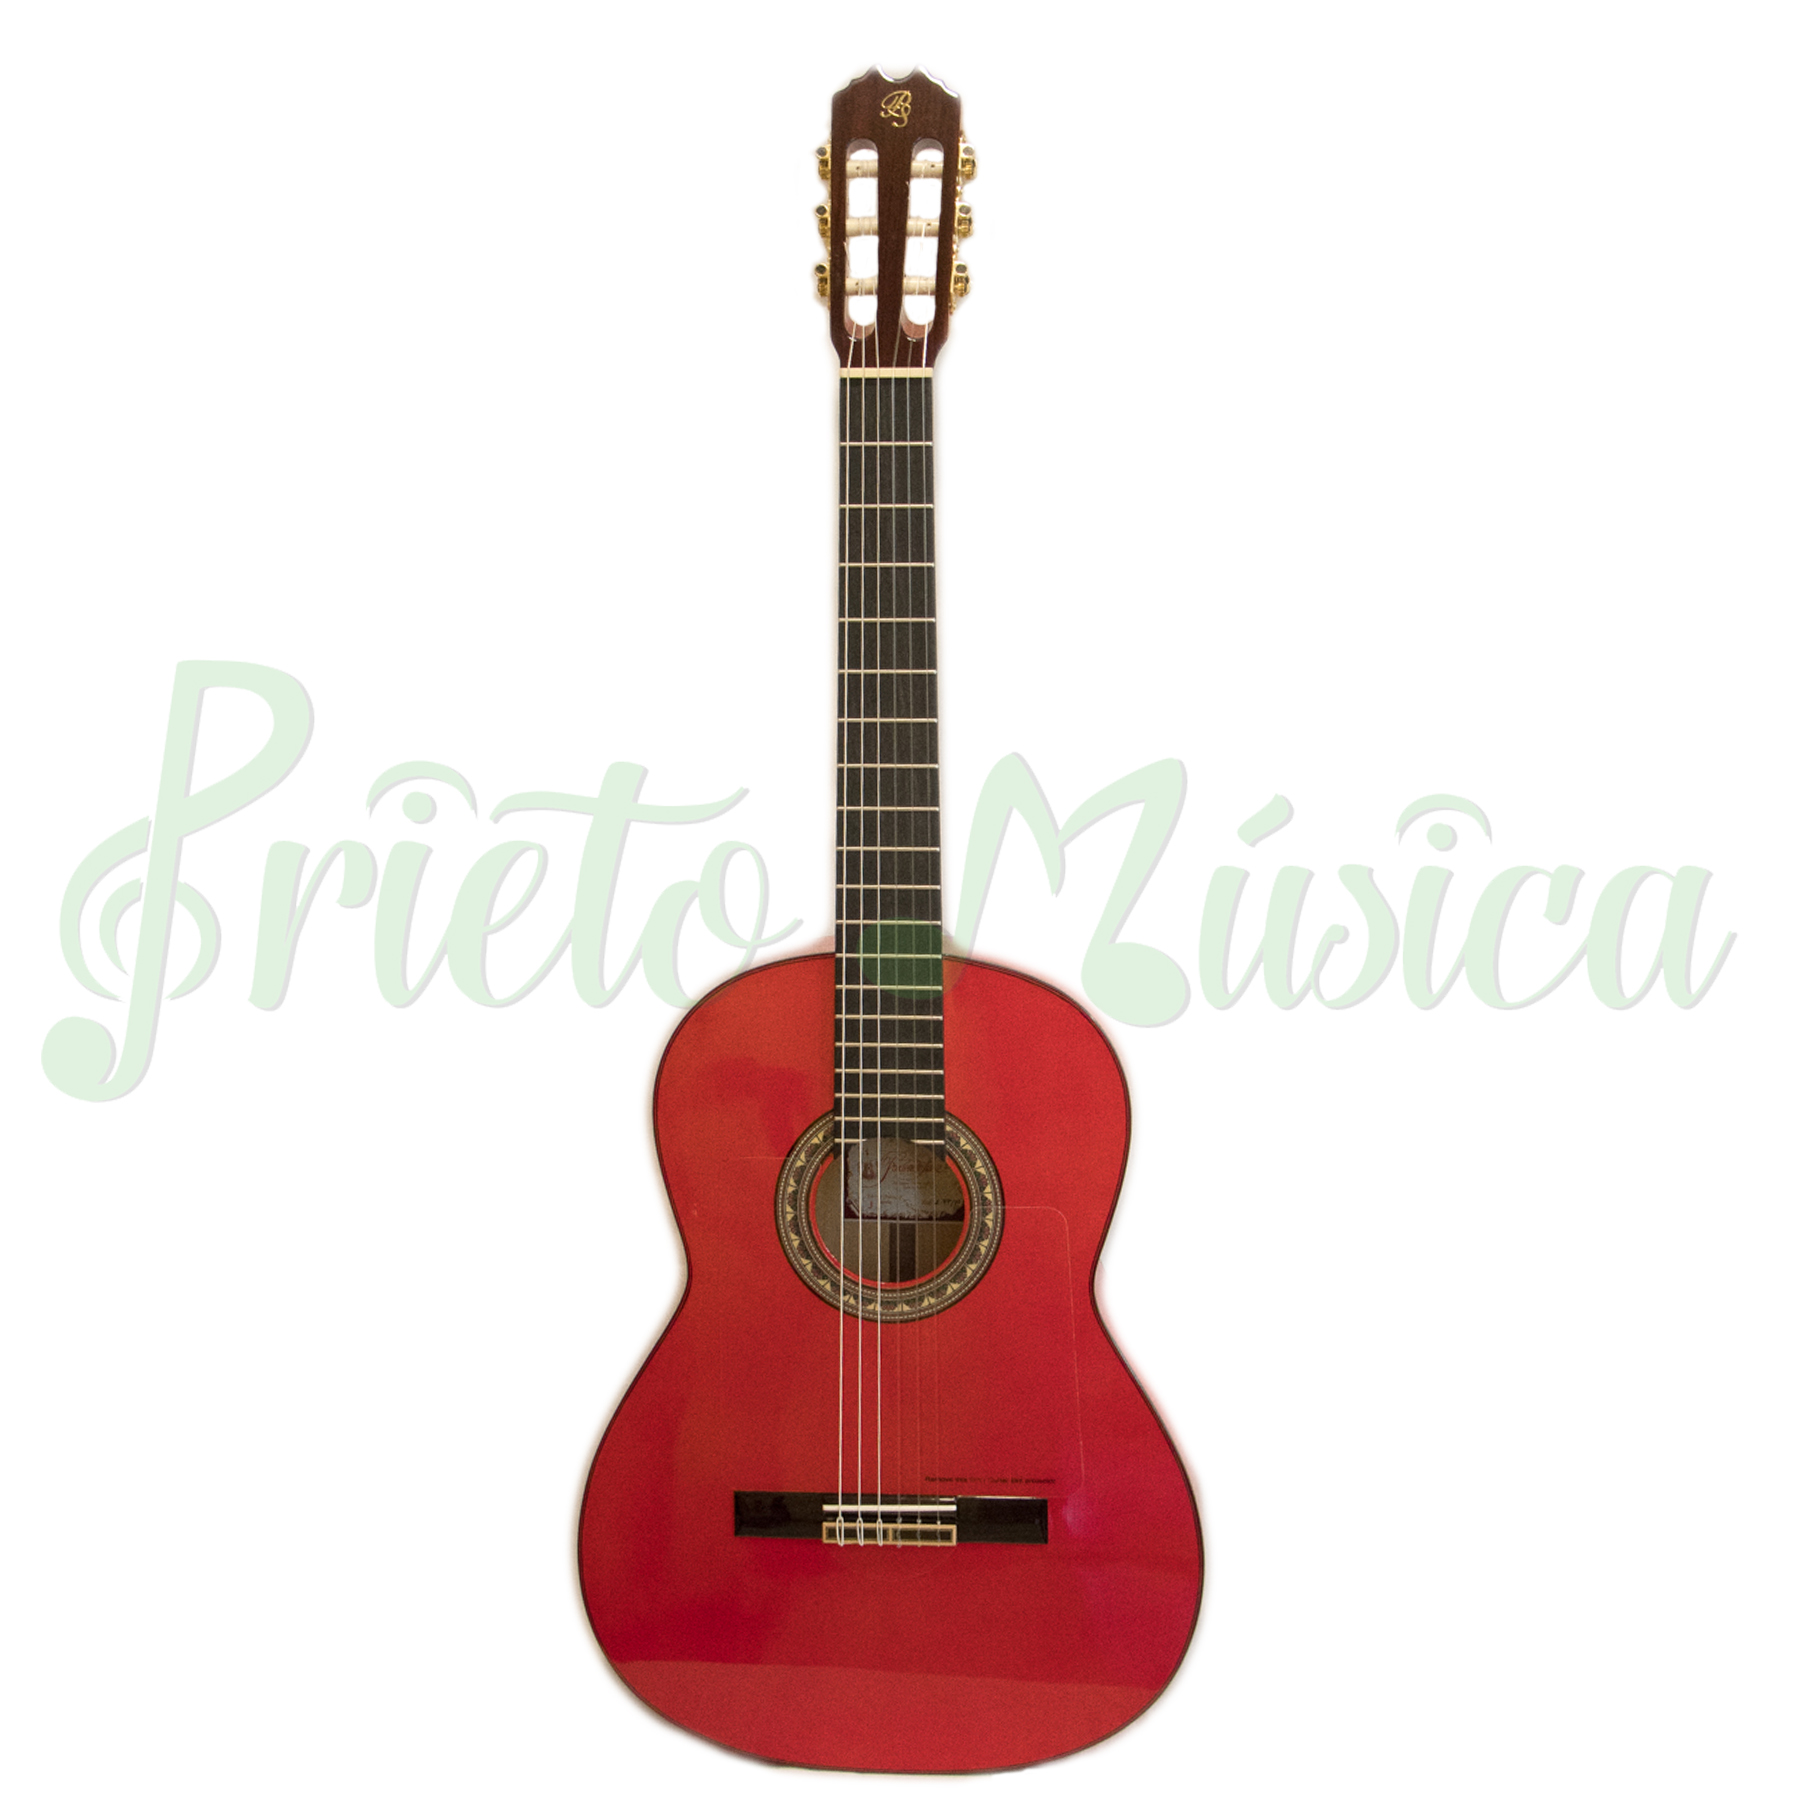 Comprar guitarra flamenca de calidad en jerez prieto musica